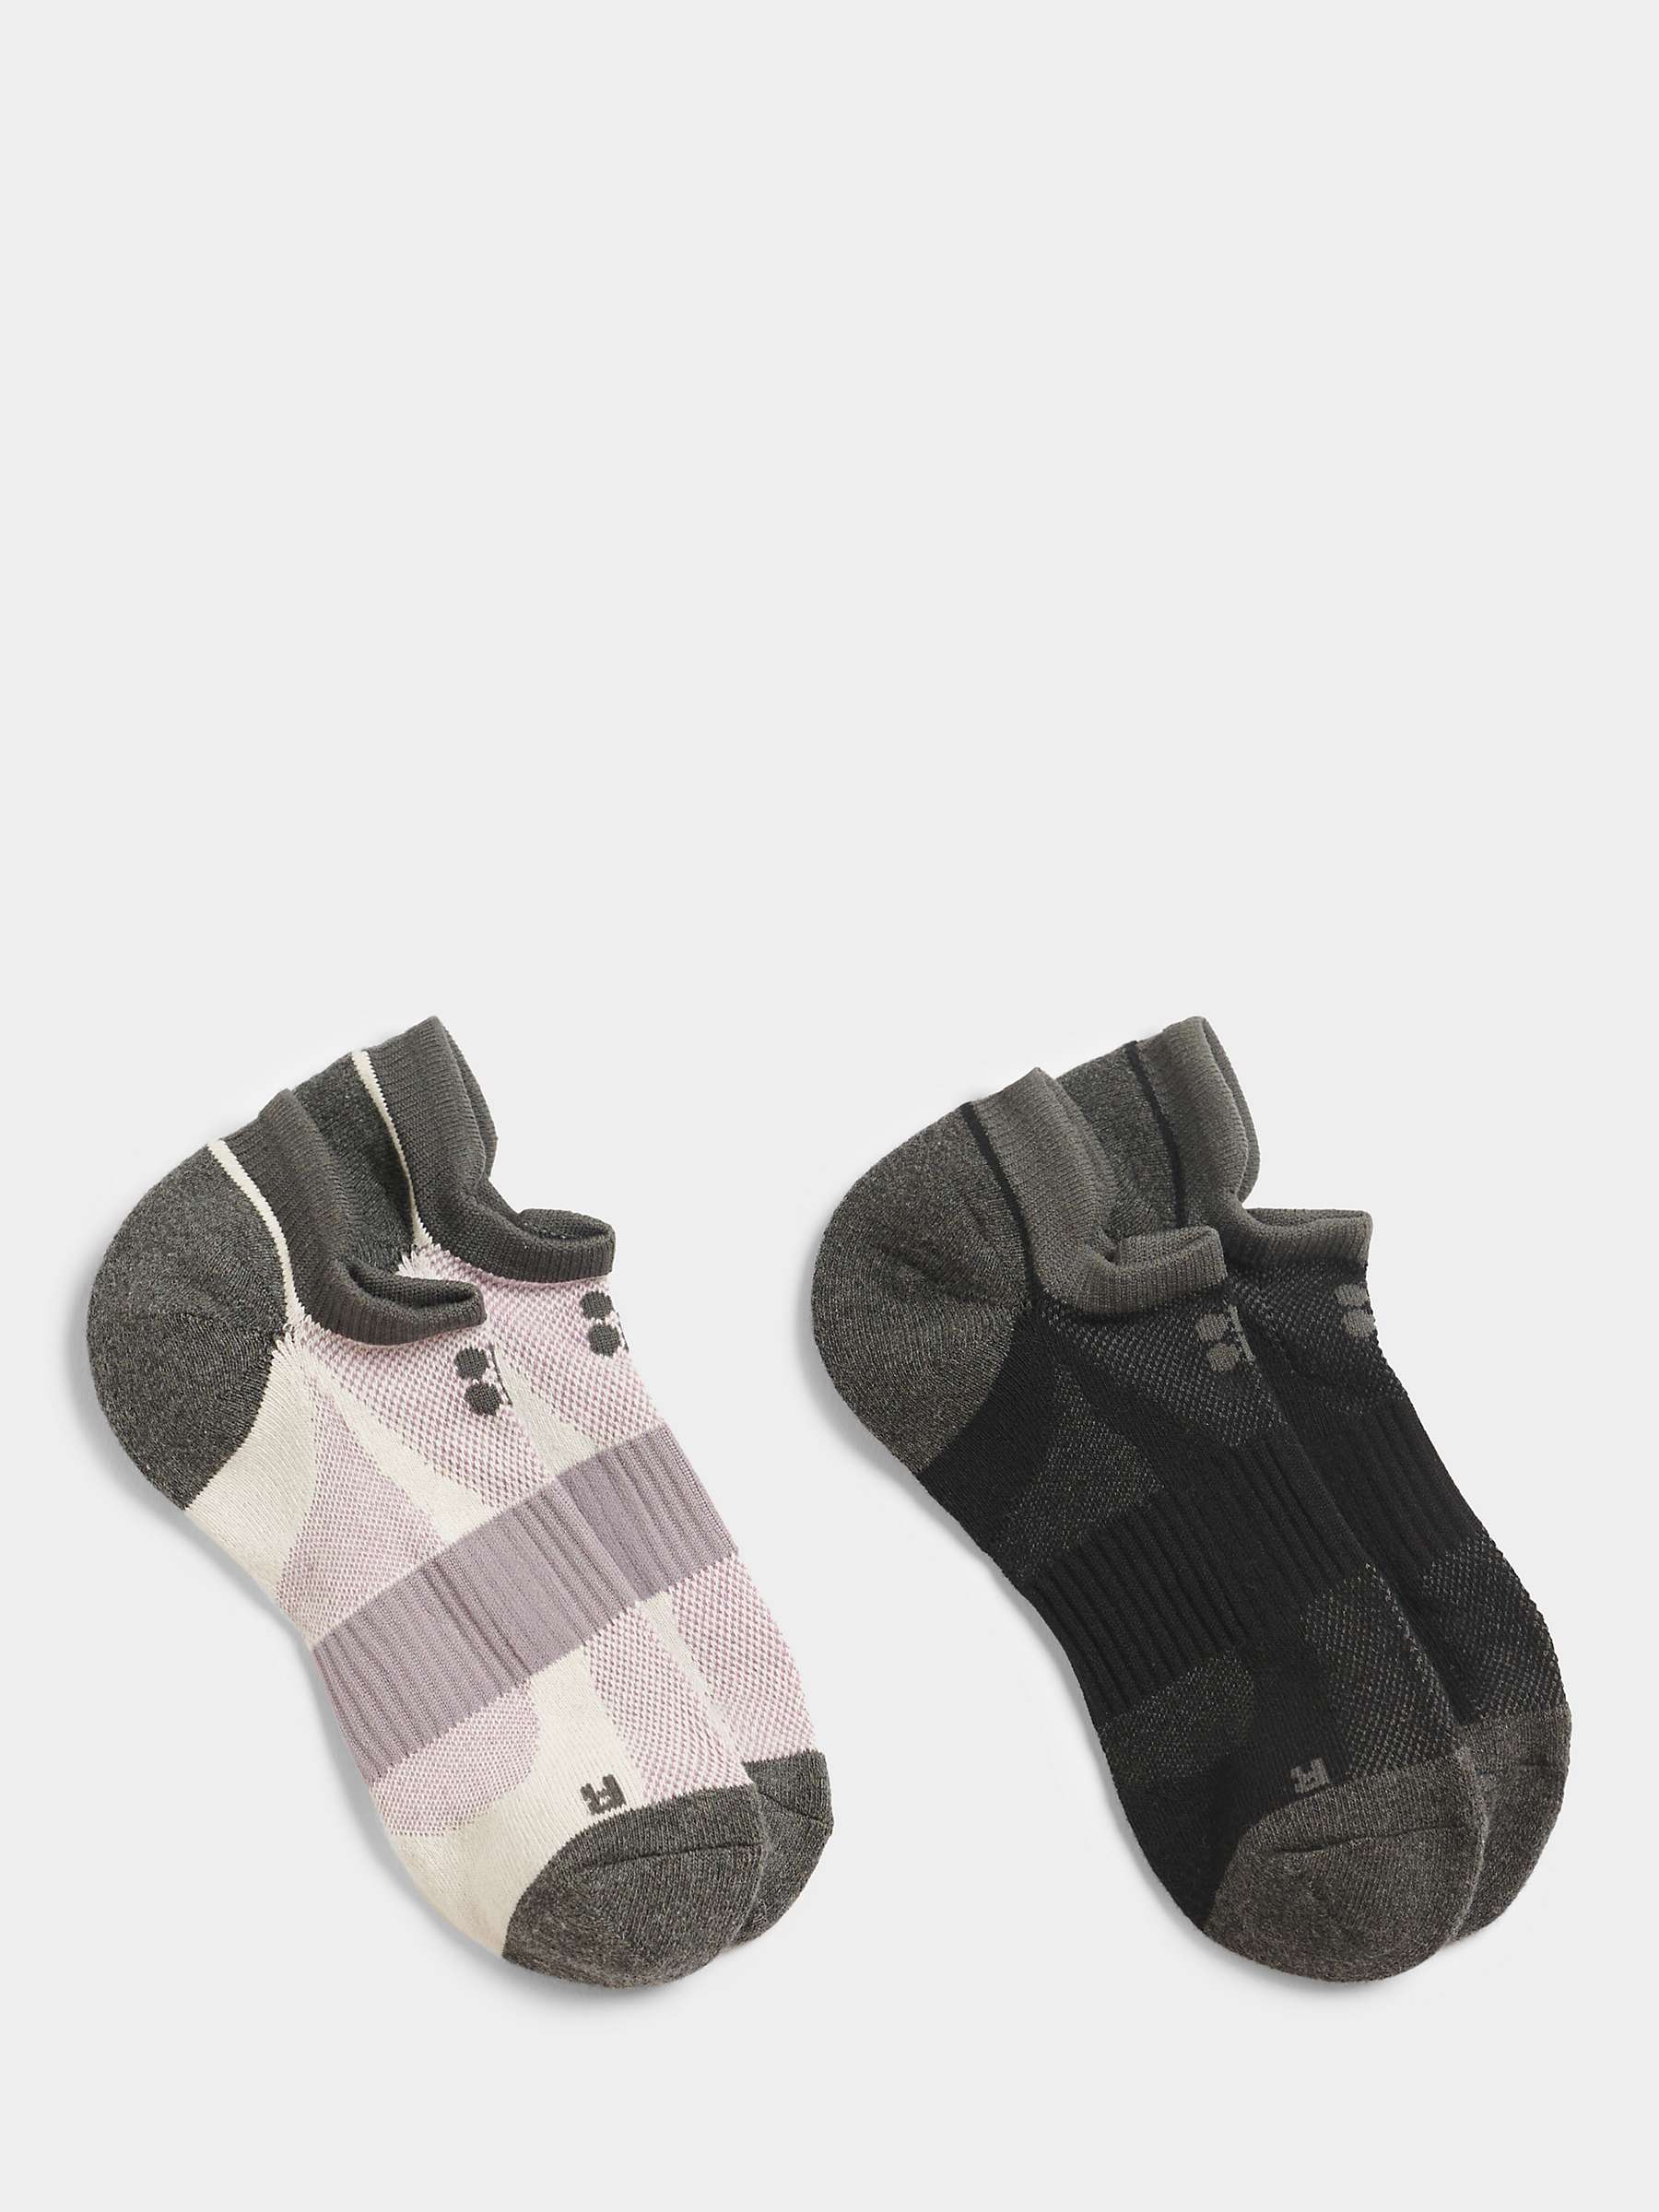 Buy Sweaty Betty Run Trainer Socks, Pack of 2 Online at johnlewis.com